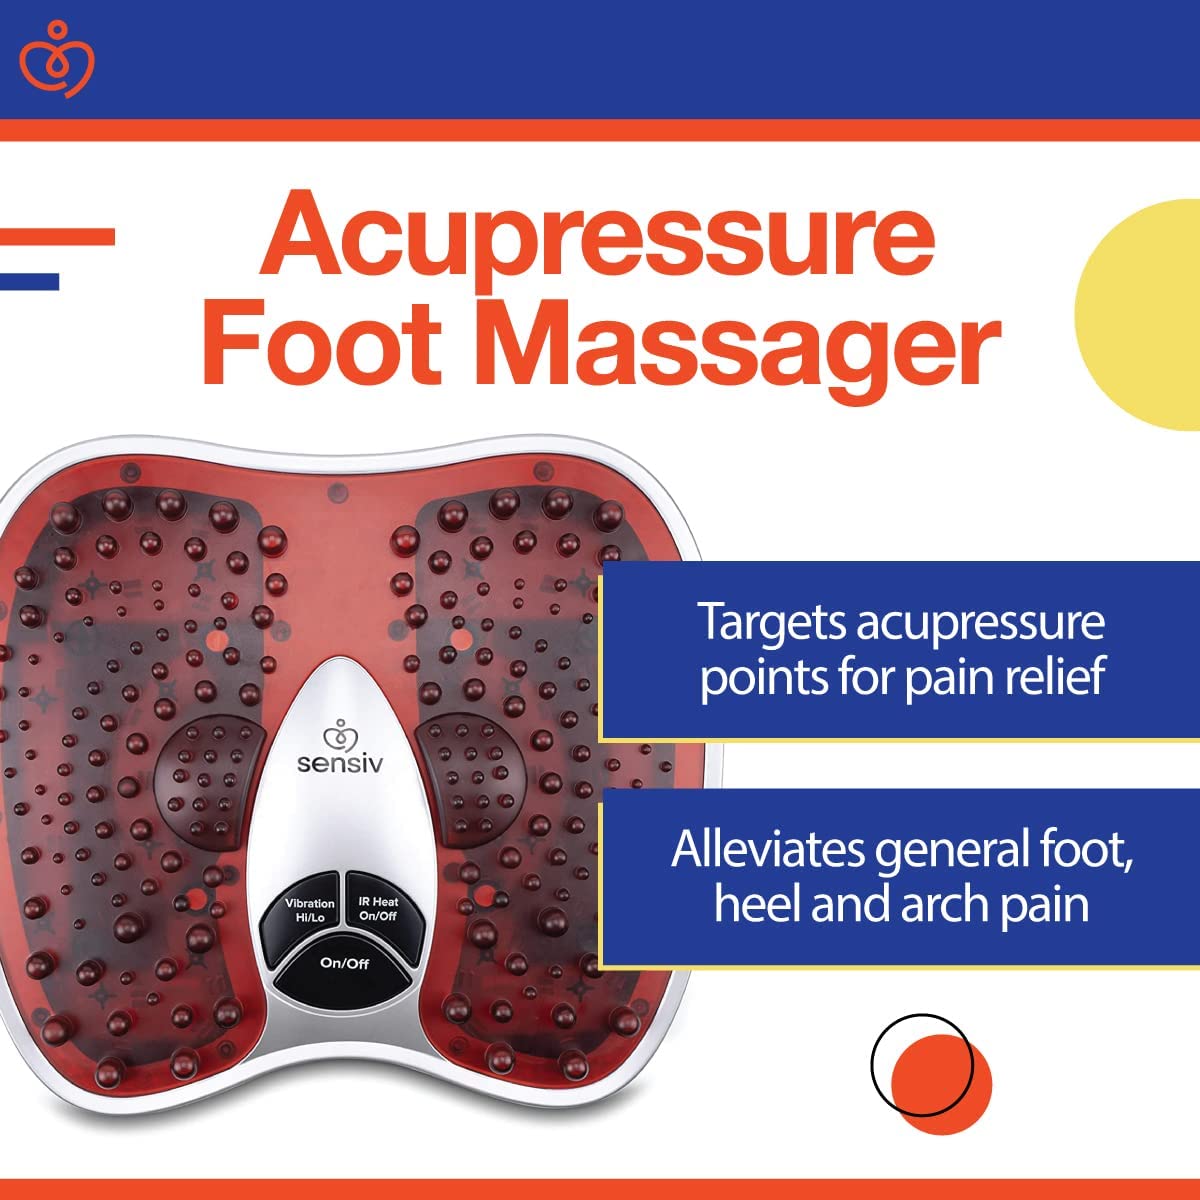 Kanjo Acupressure Foot Pain Relief Mat  Pressure Point Foot Massager for  Plantar Fasciitis, Heel Pain